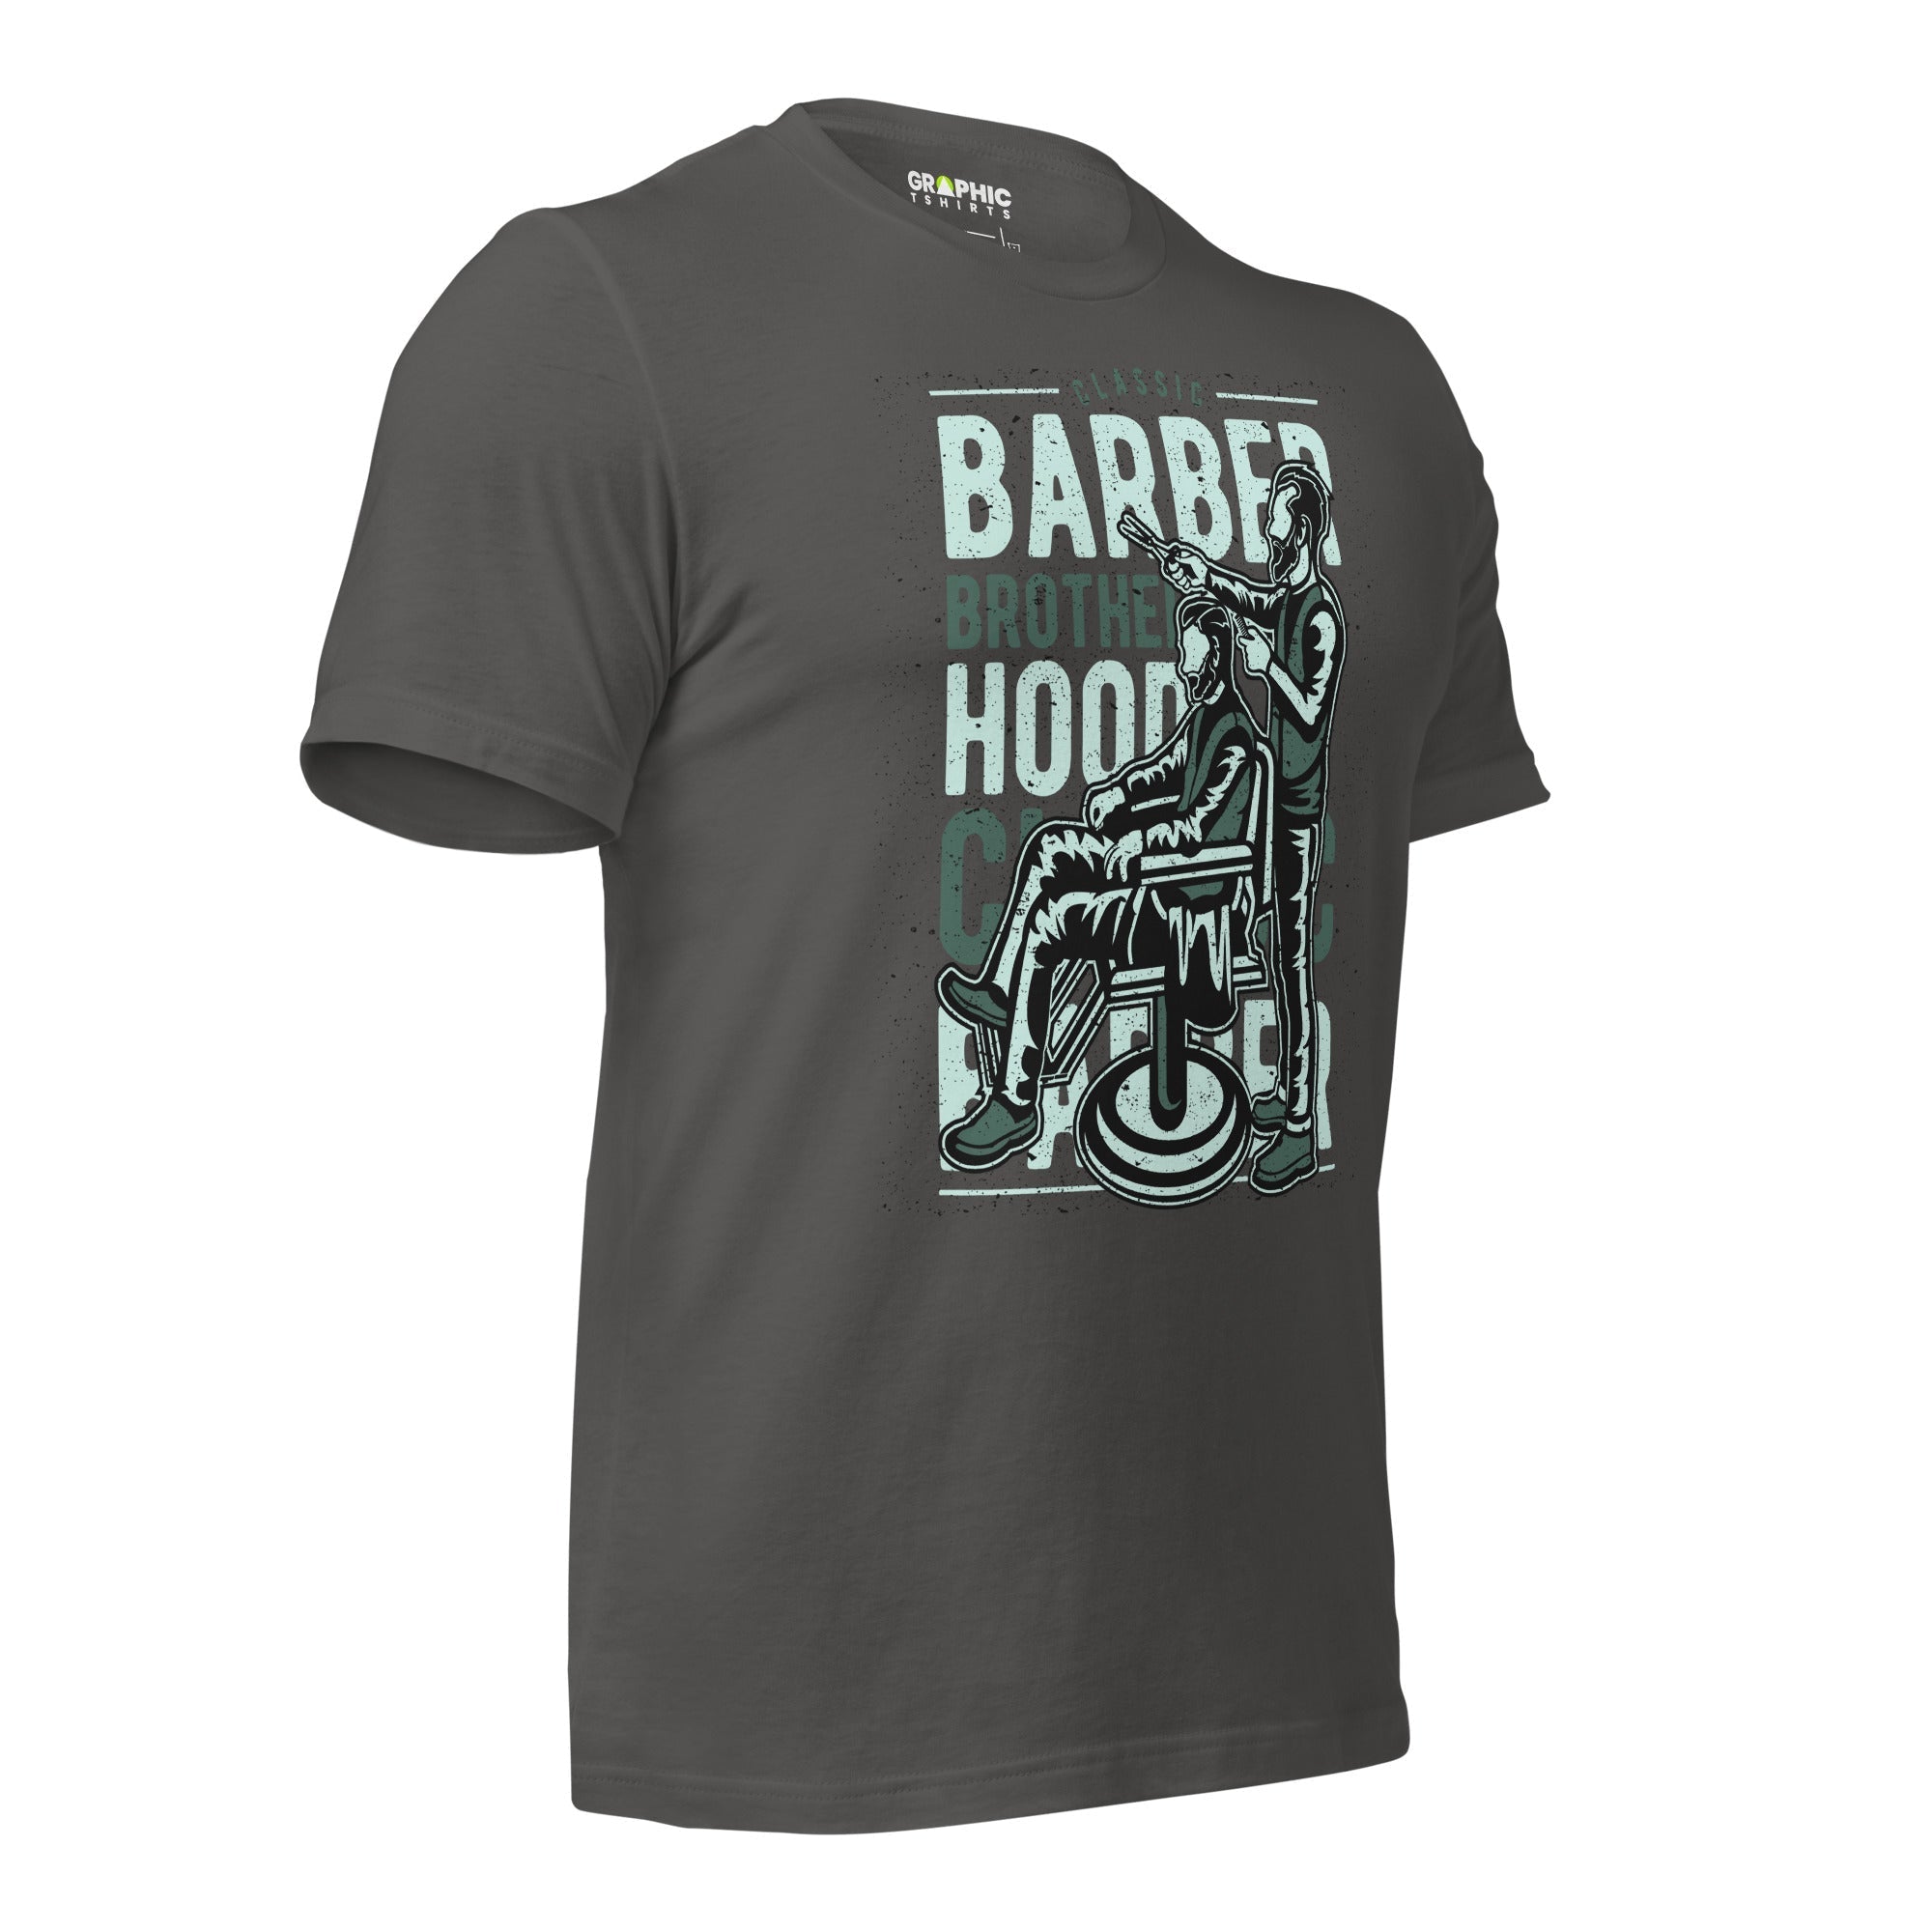 Unisex Staple T-Shirt - Classic Barber Brotherhood - GRAPHIC T-SHIRTS